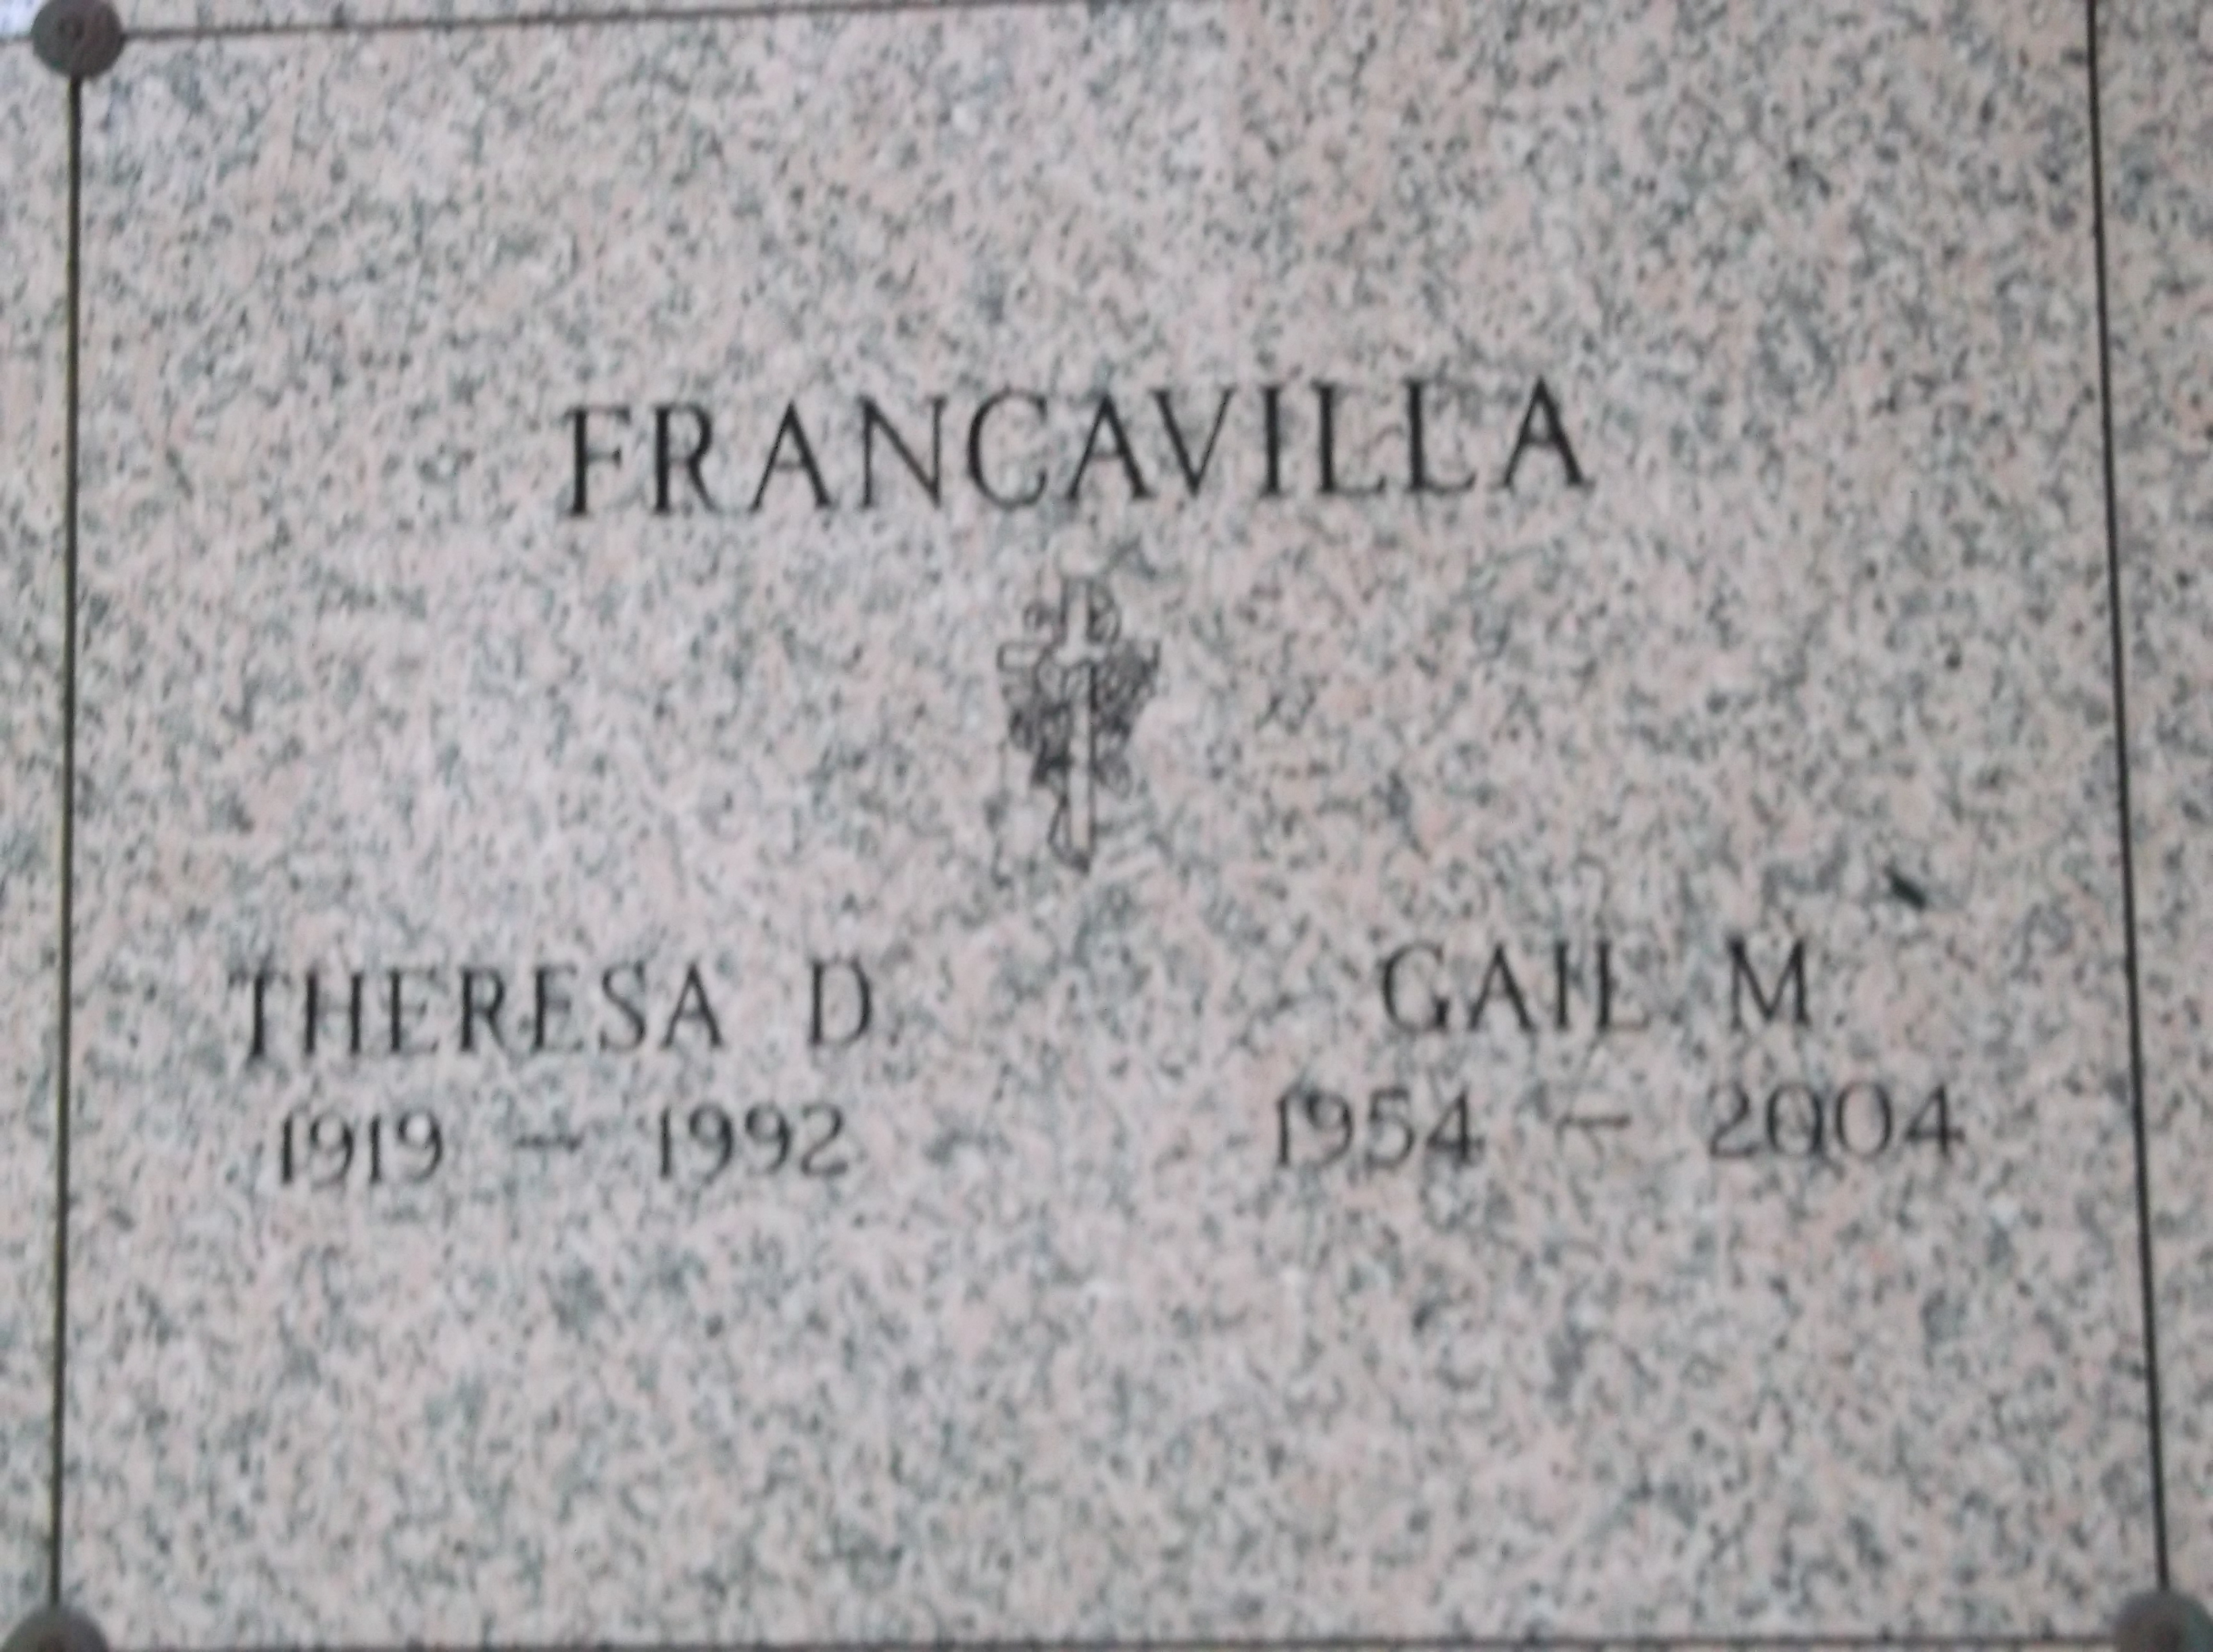 Theresa D Francavilla